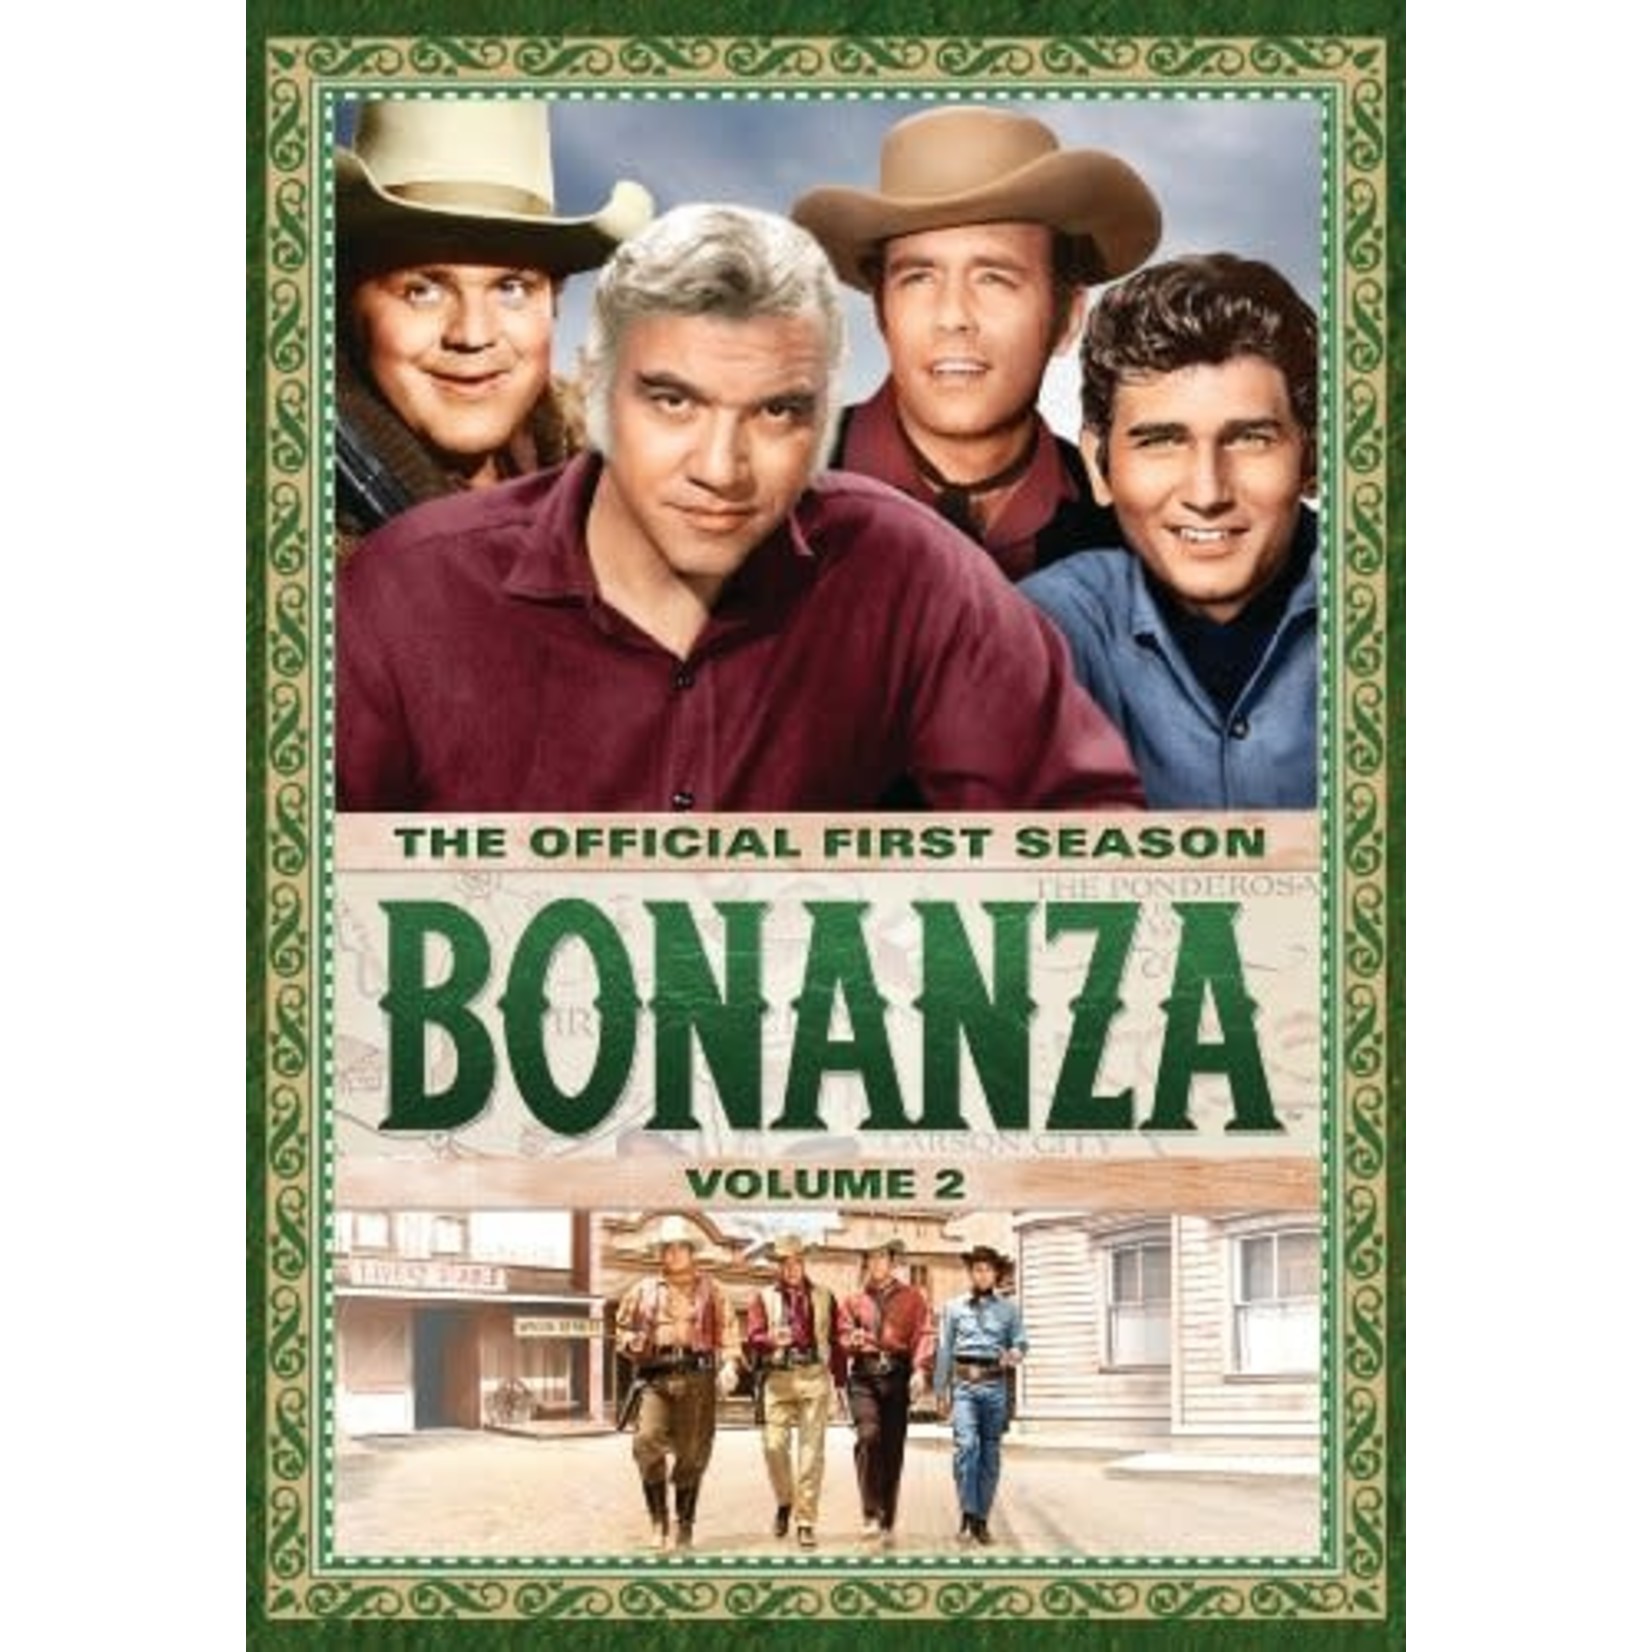 Bonanza - Season 1 Vol. 2 [USED DVD]